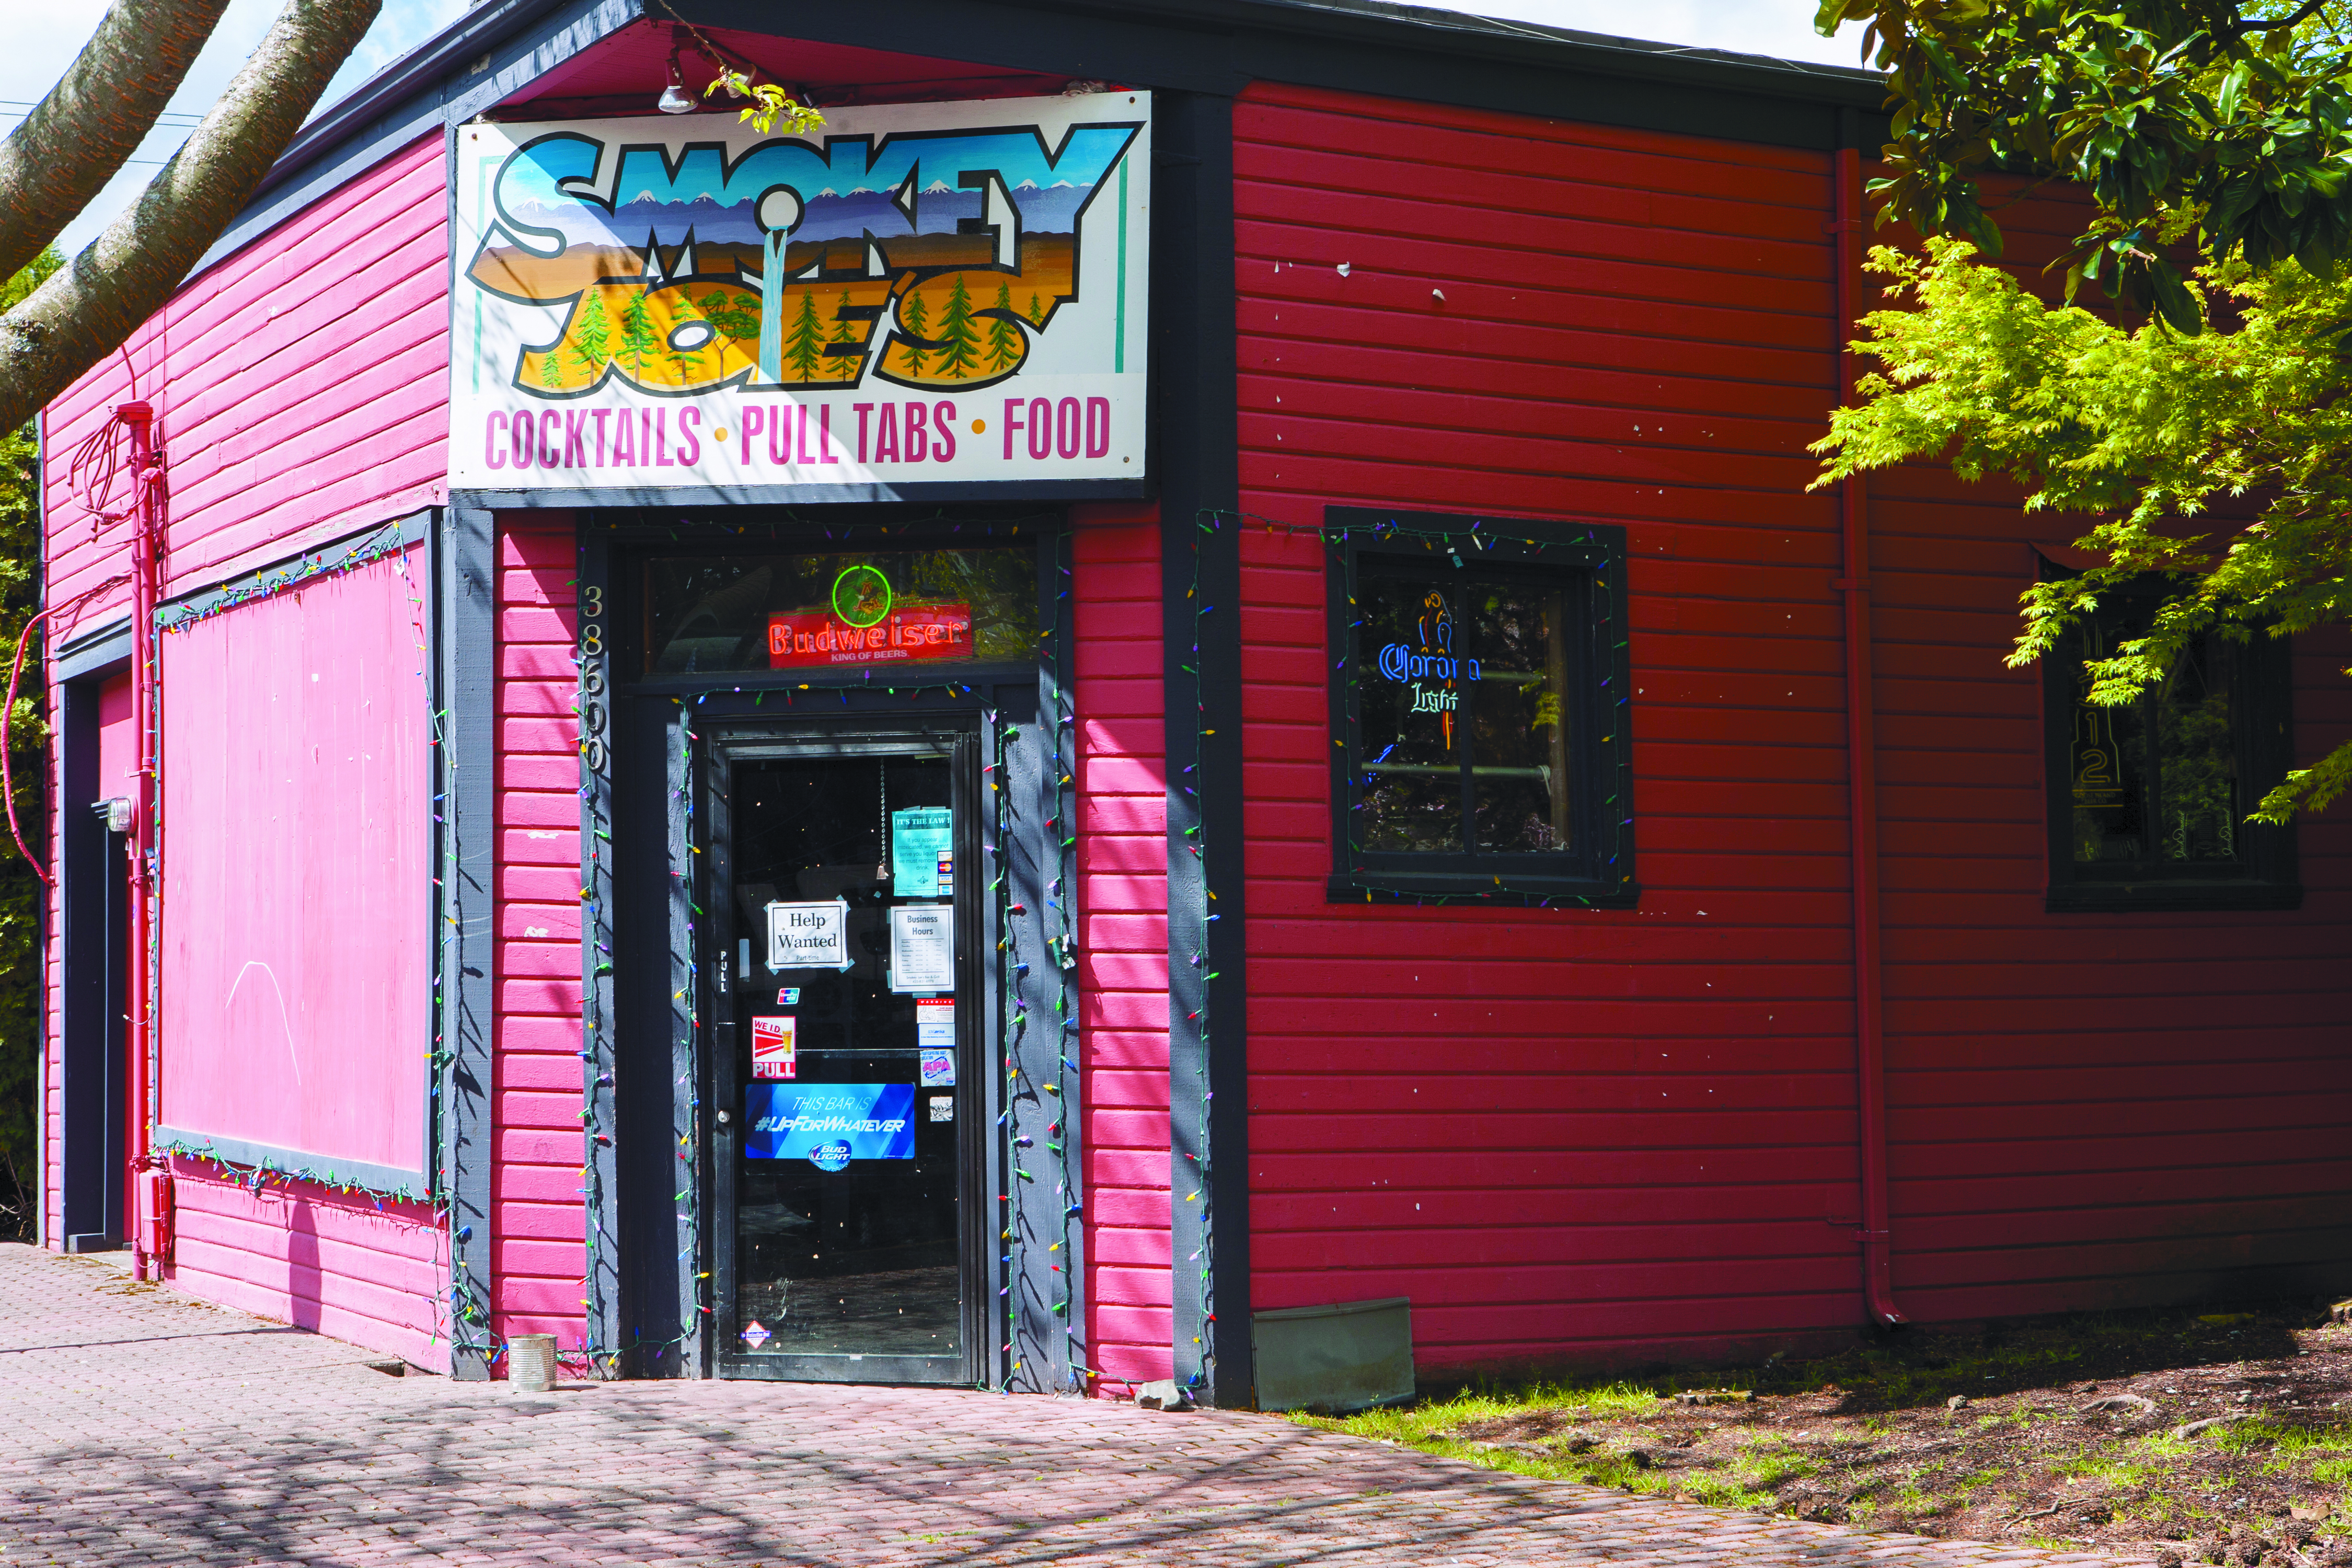 Smokey Joe’s Tavern: a “townies” hangout.